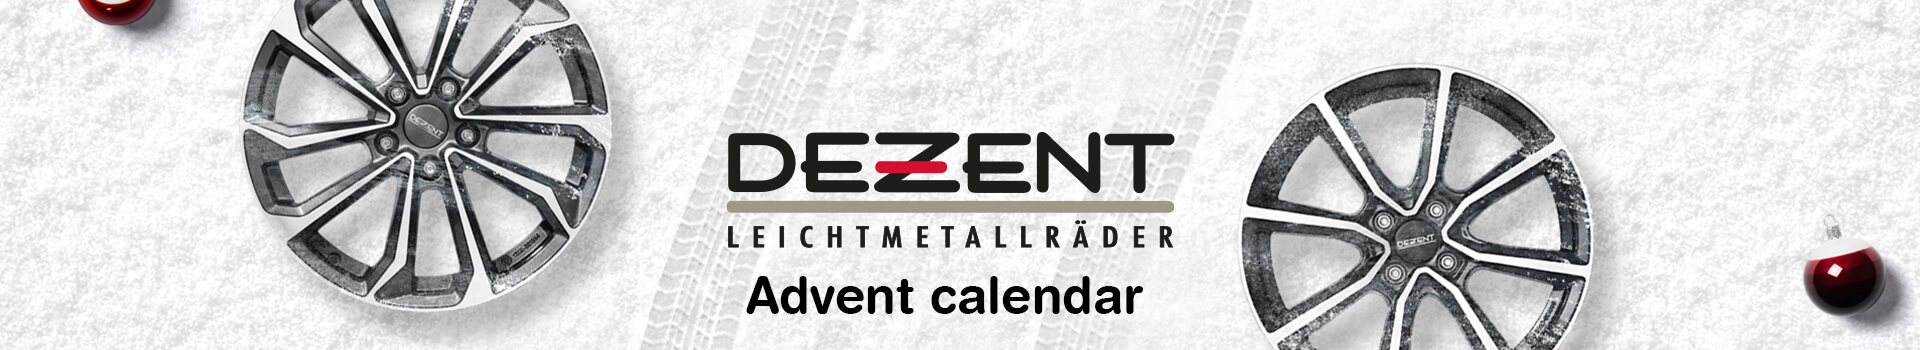 DEZENT Advent calendar